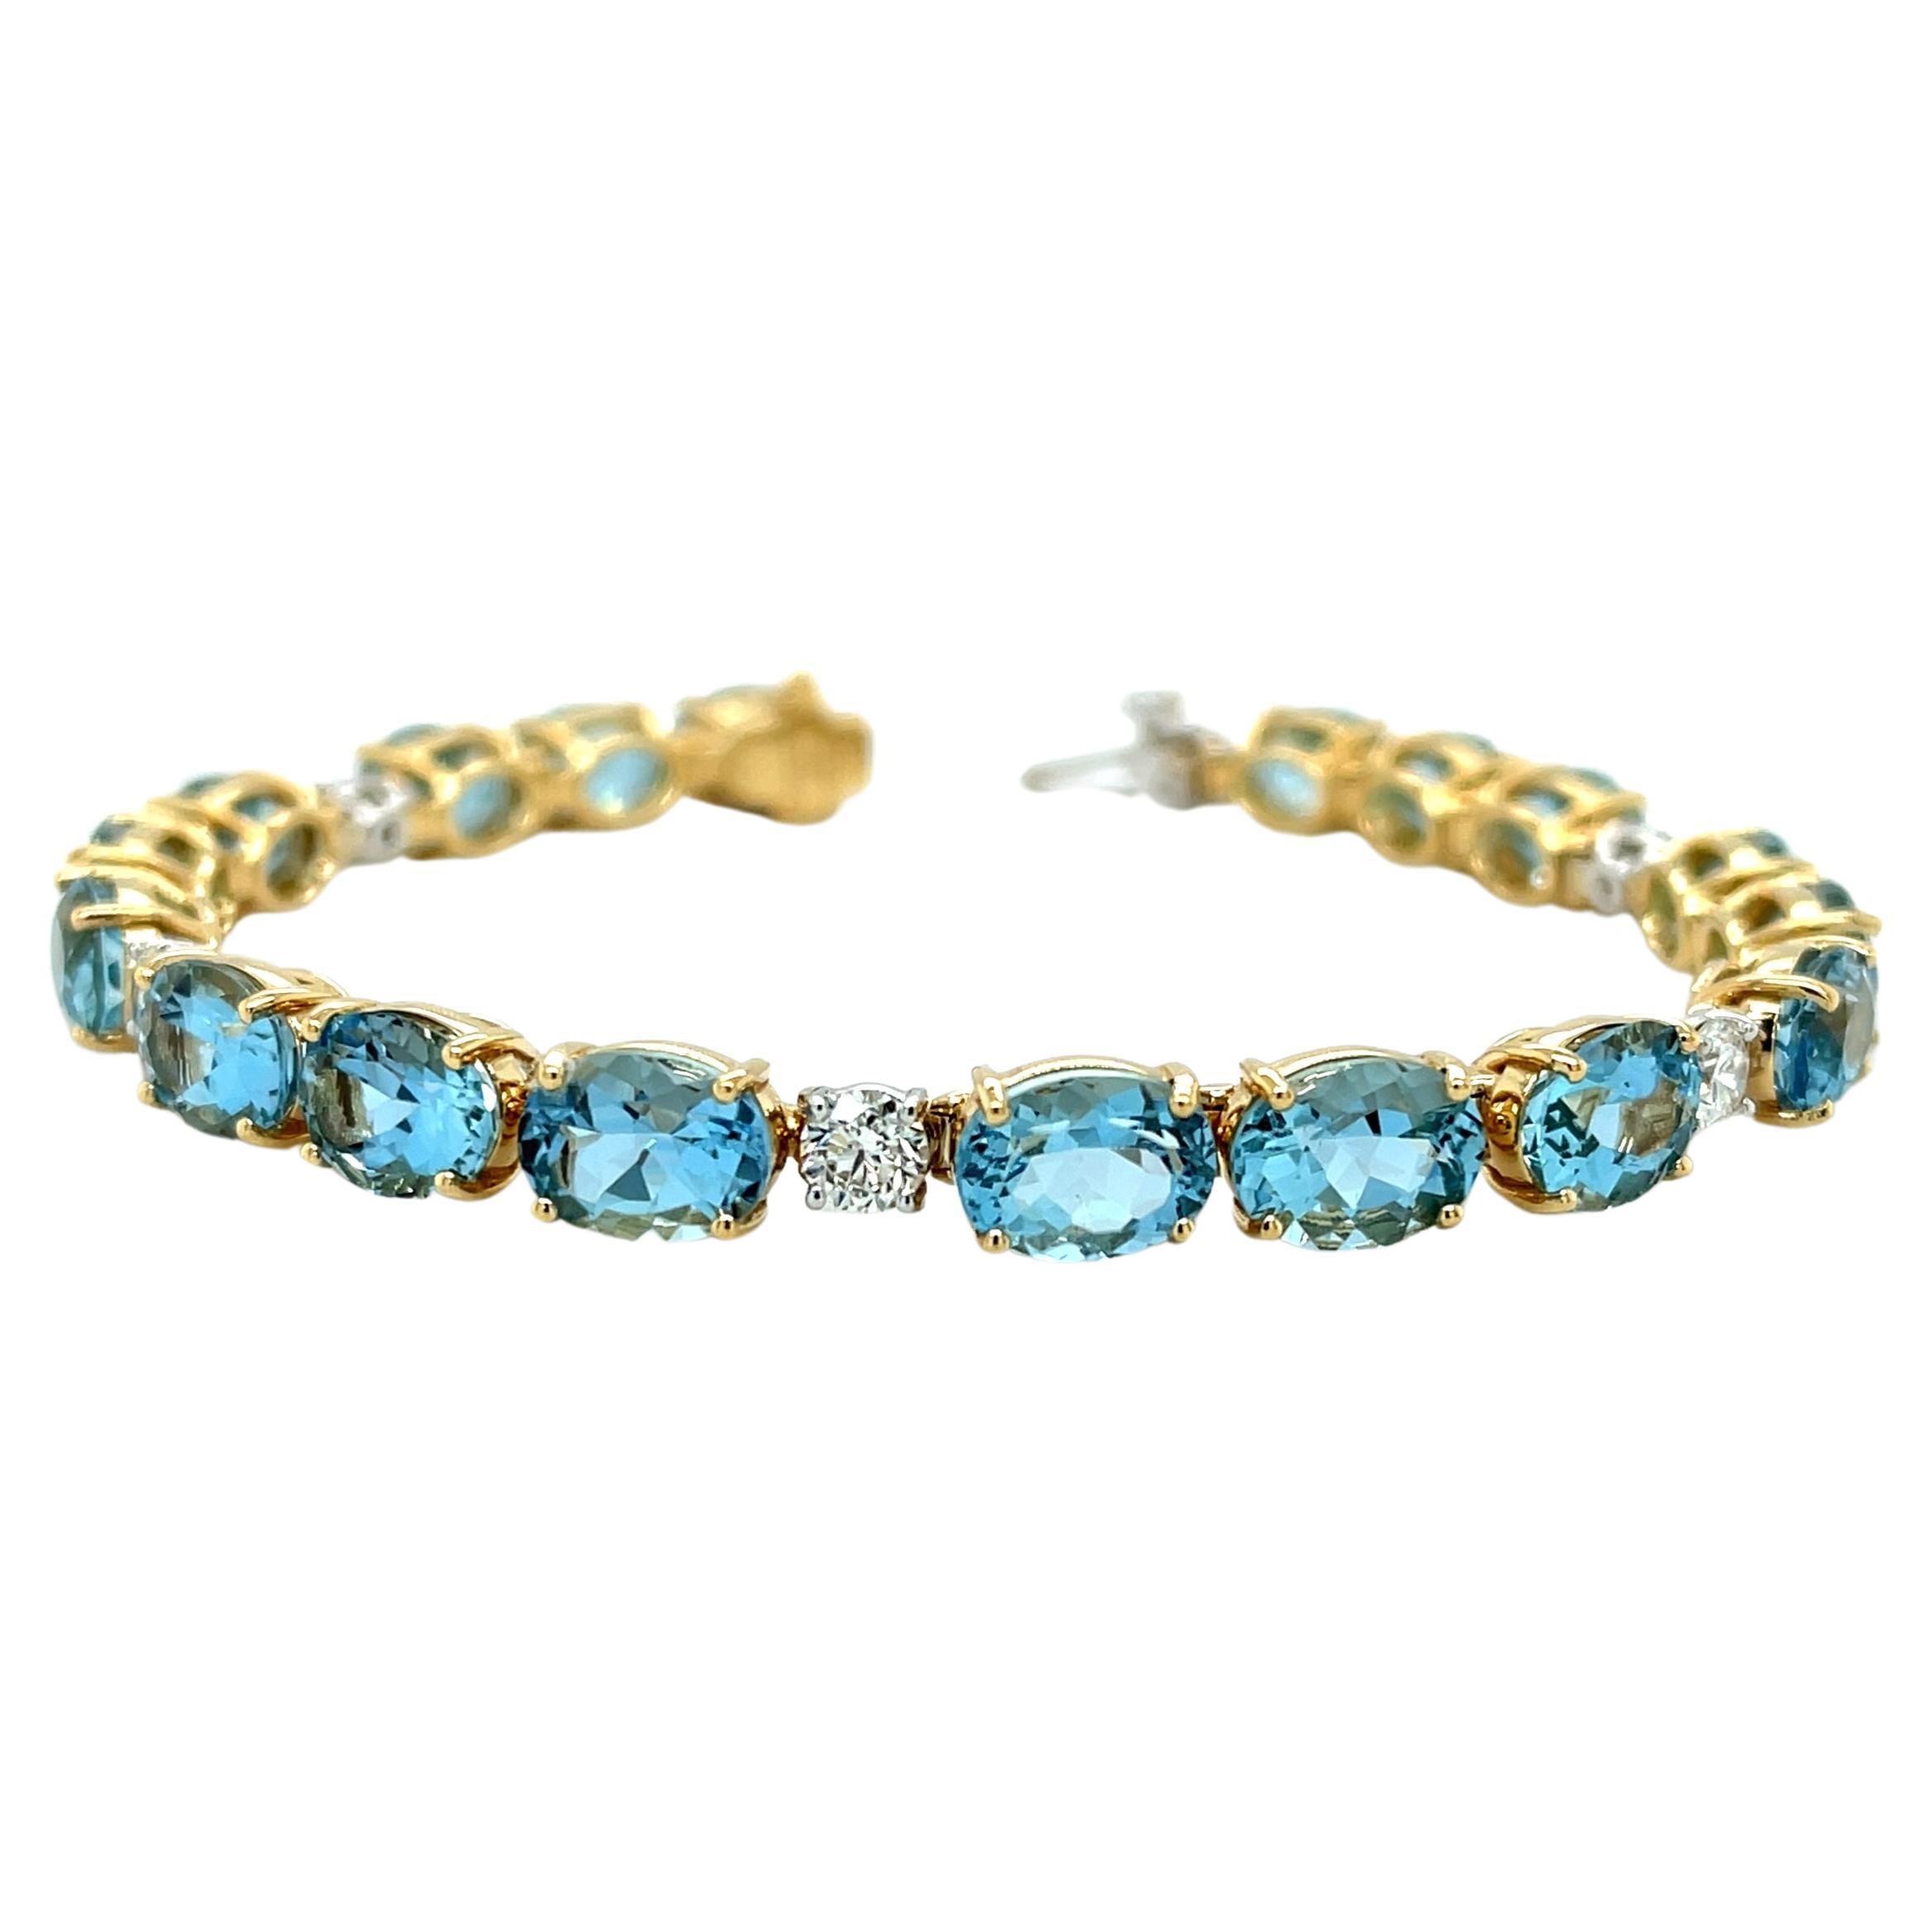 Aquamarine and Diamond Tennis Bracelet in 18k Gold, 20.99 Carats Total